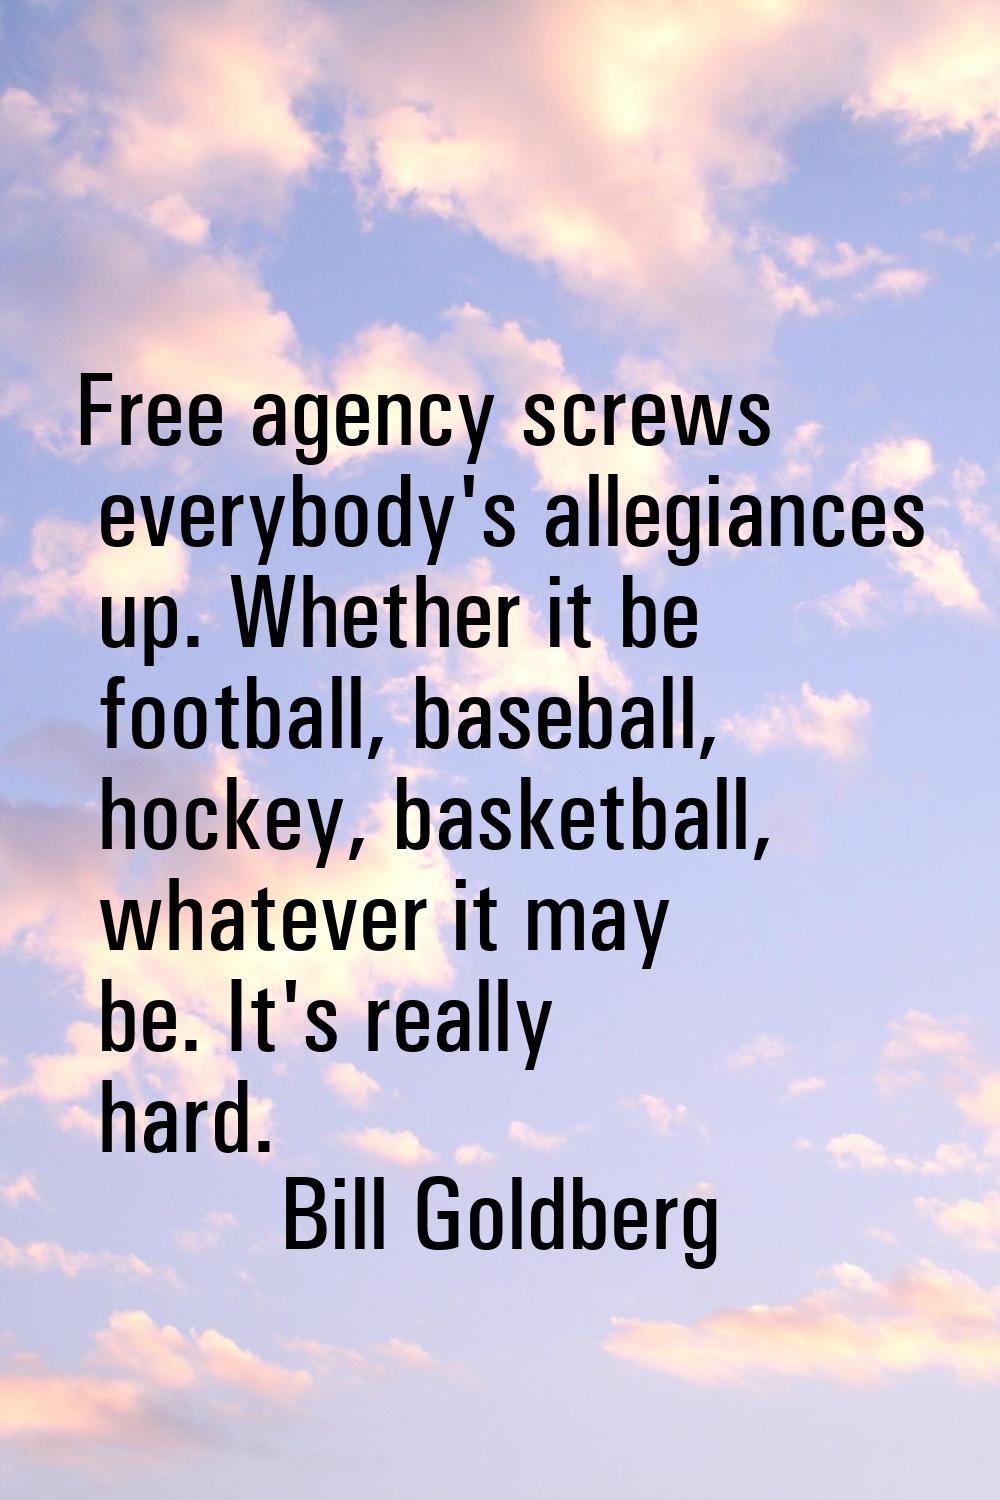 Free agency screws everybody's allegiances up. Whether it be football, baseball, hockey, basketball